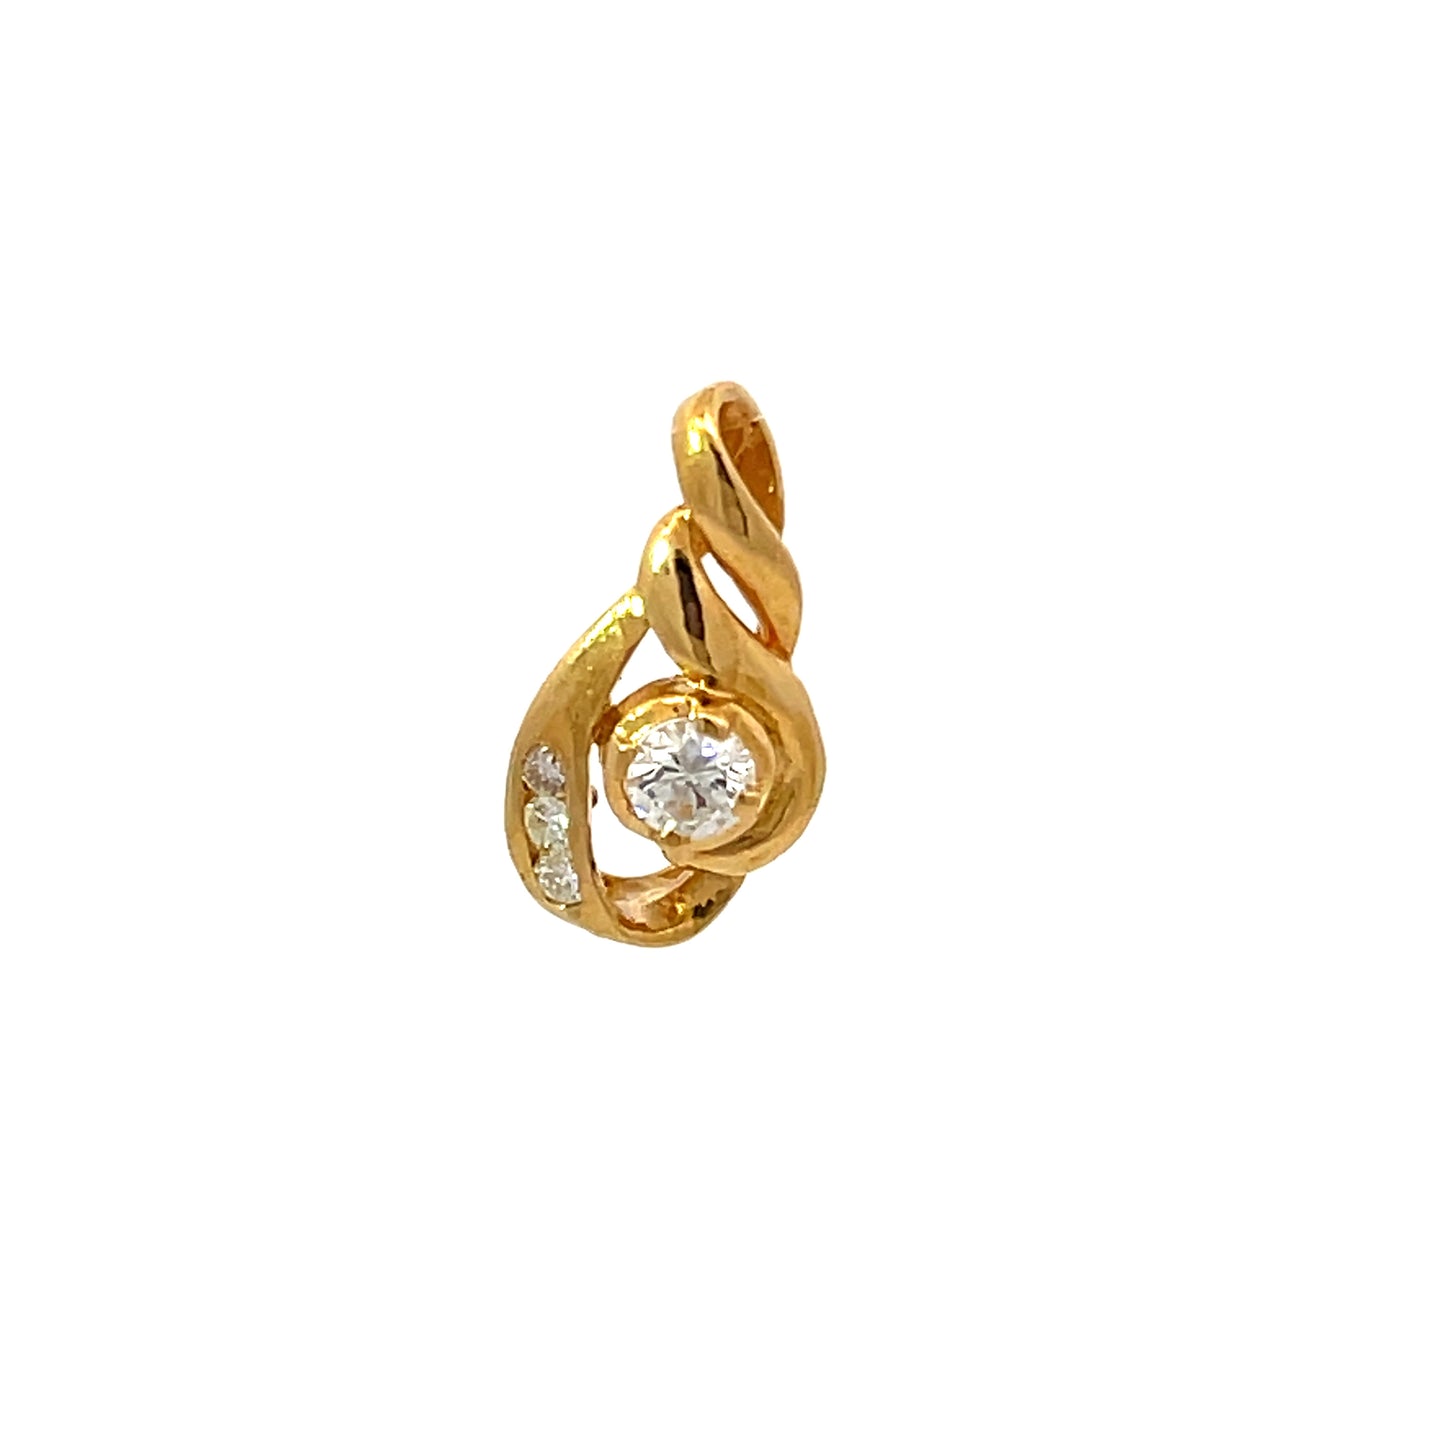 GOLD DIAMOND PENDANT ( 20K ) ( 1.4g ) - 0010243 Chain sold separately